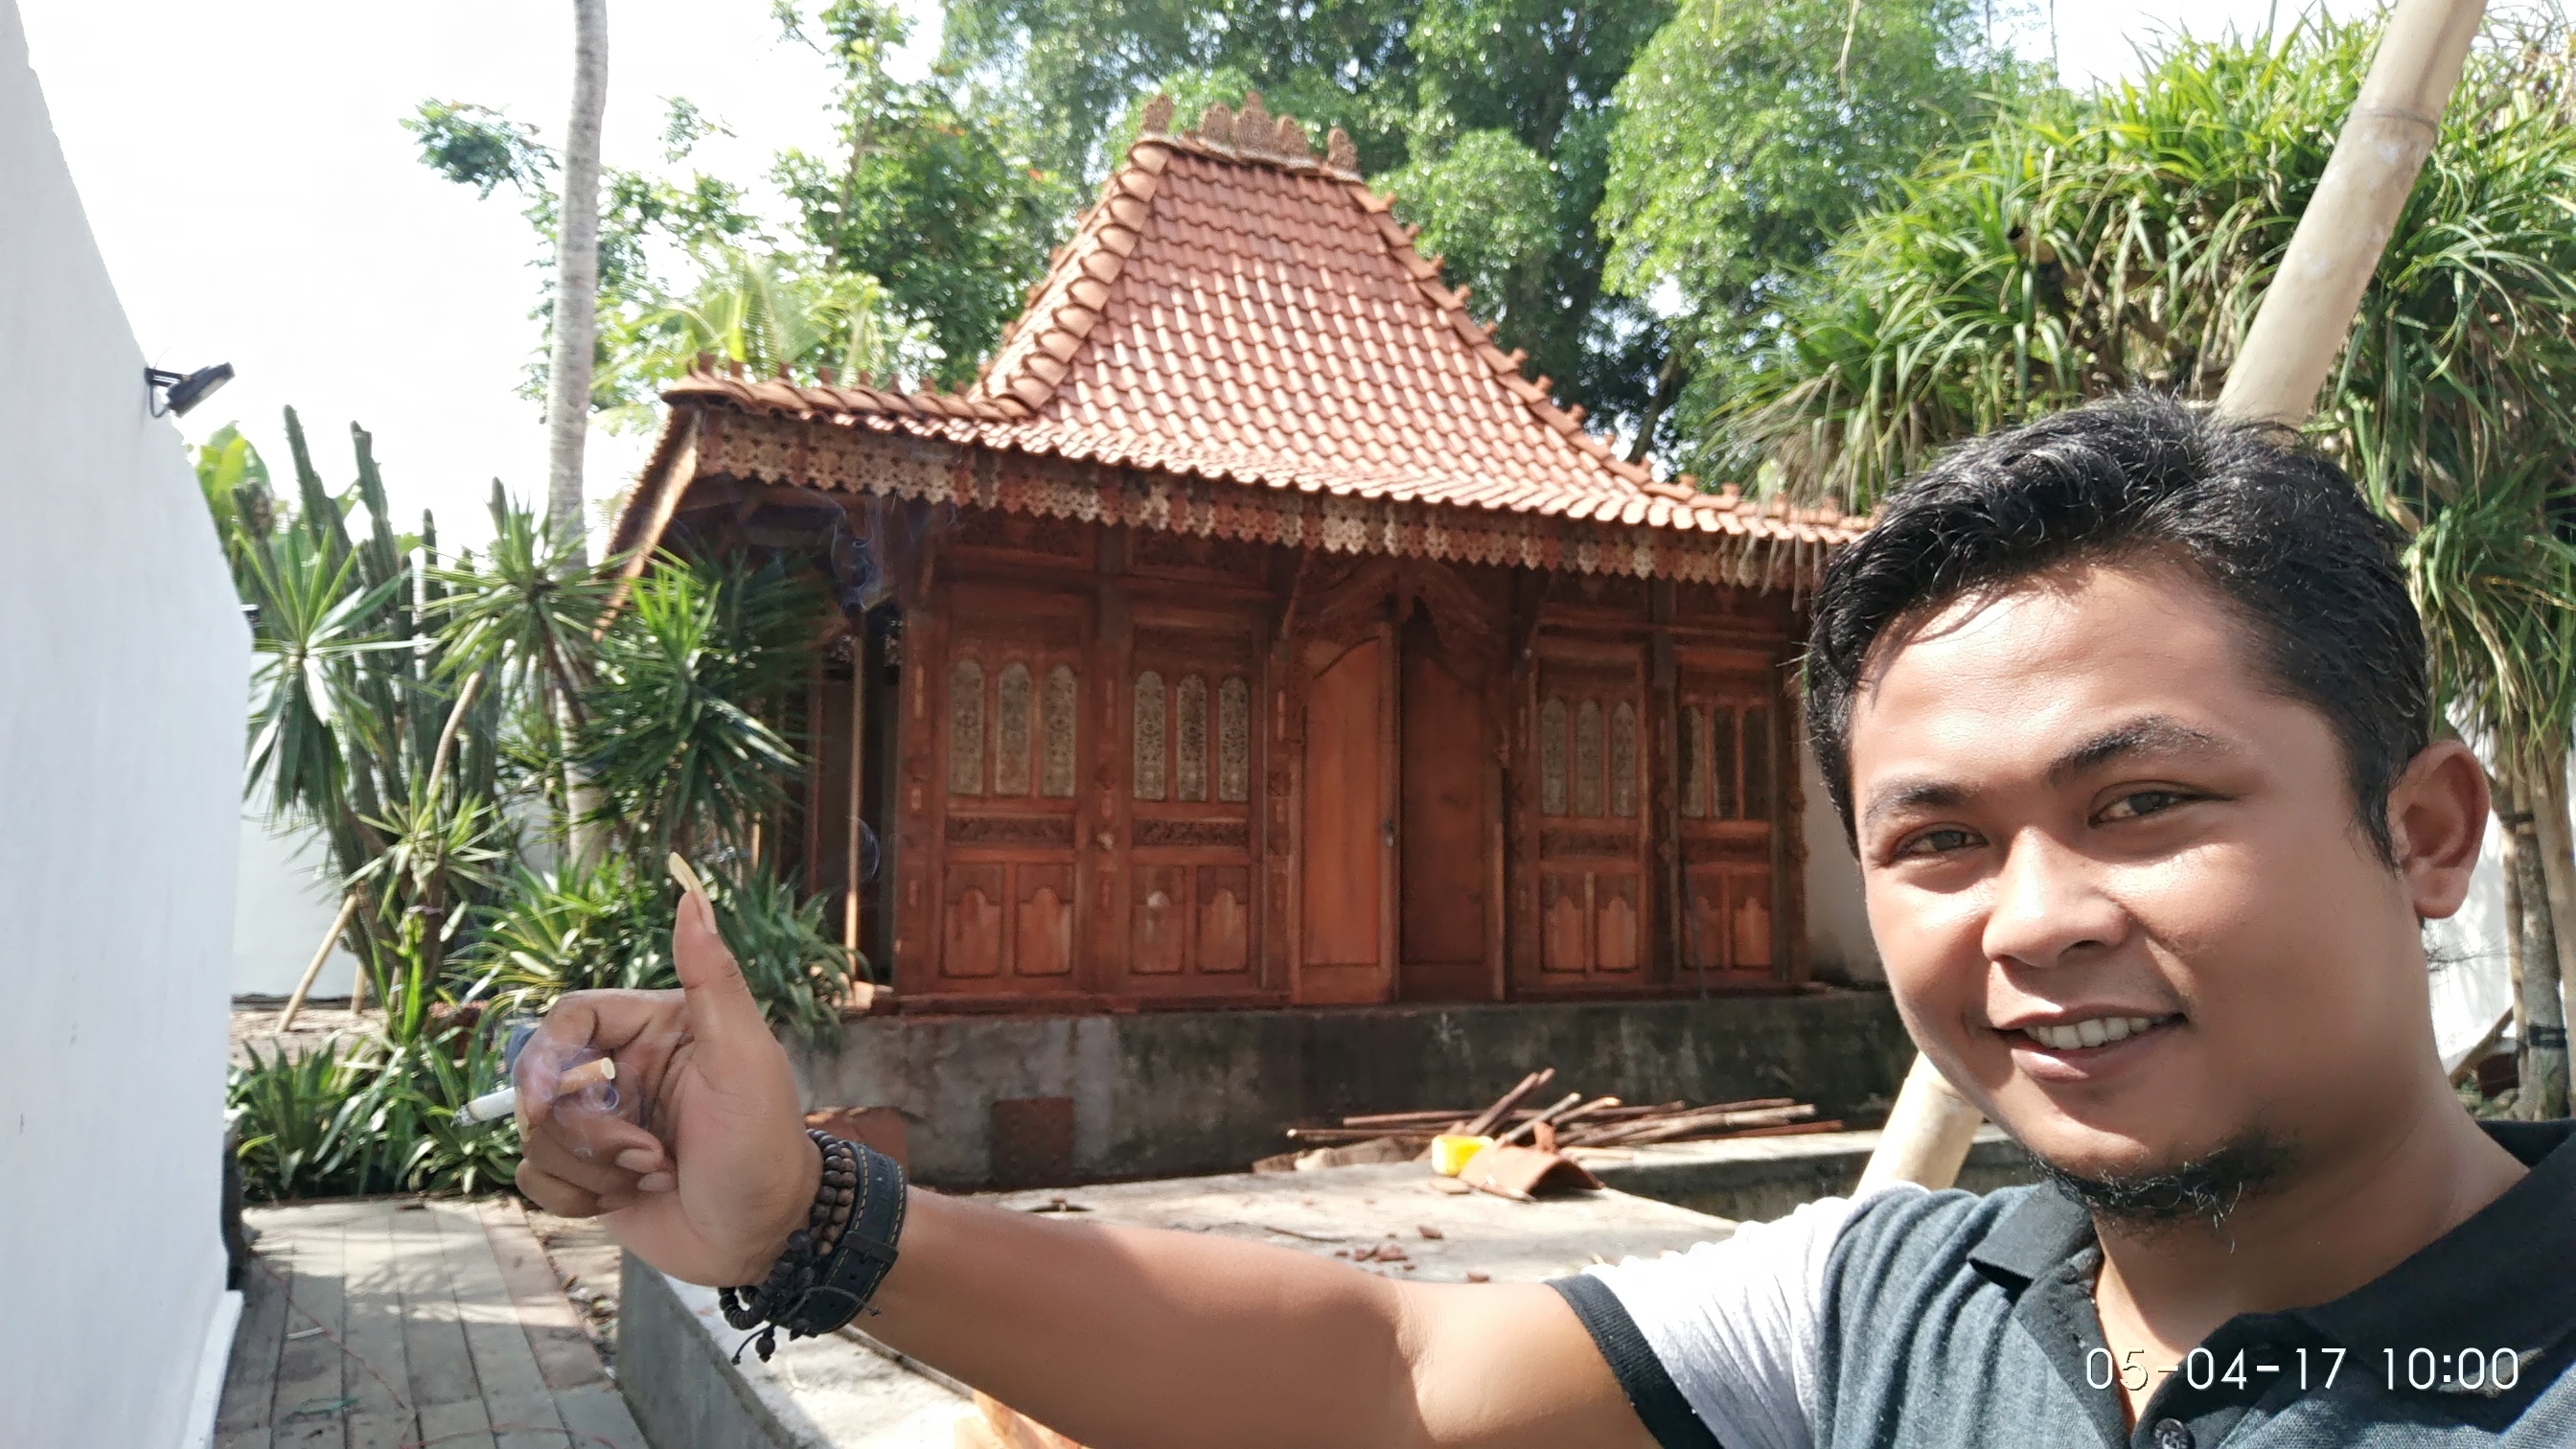 jual rumah kayu di Jogja, jual rumah kayu di banten, surabaya, malang, banyuwangi